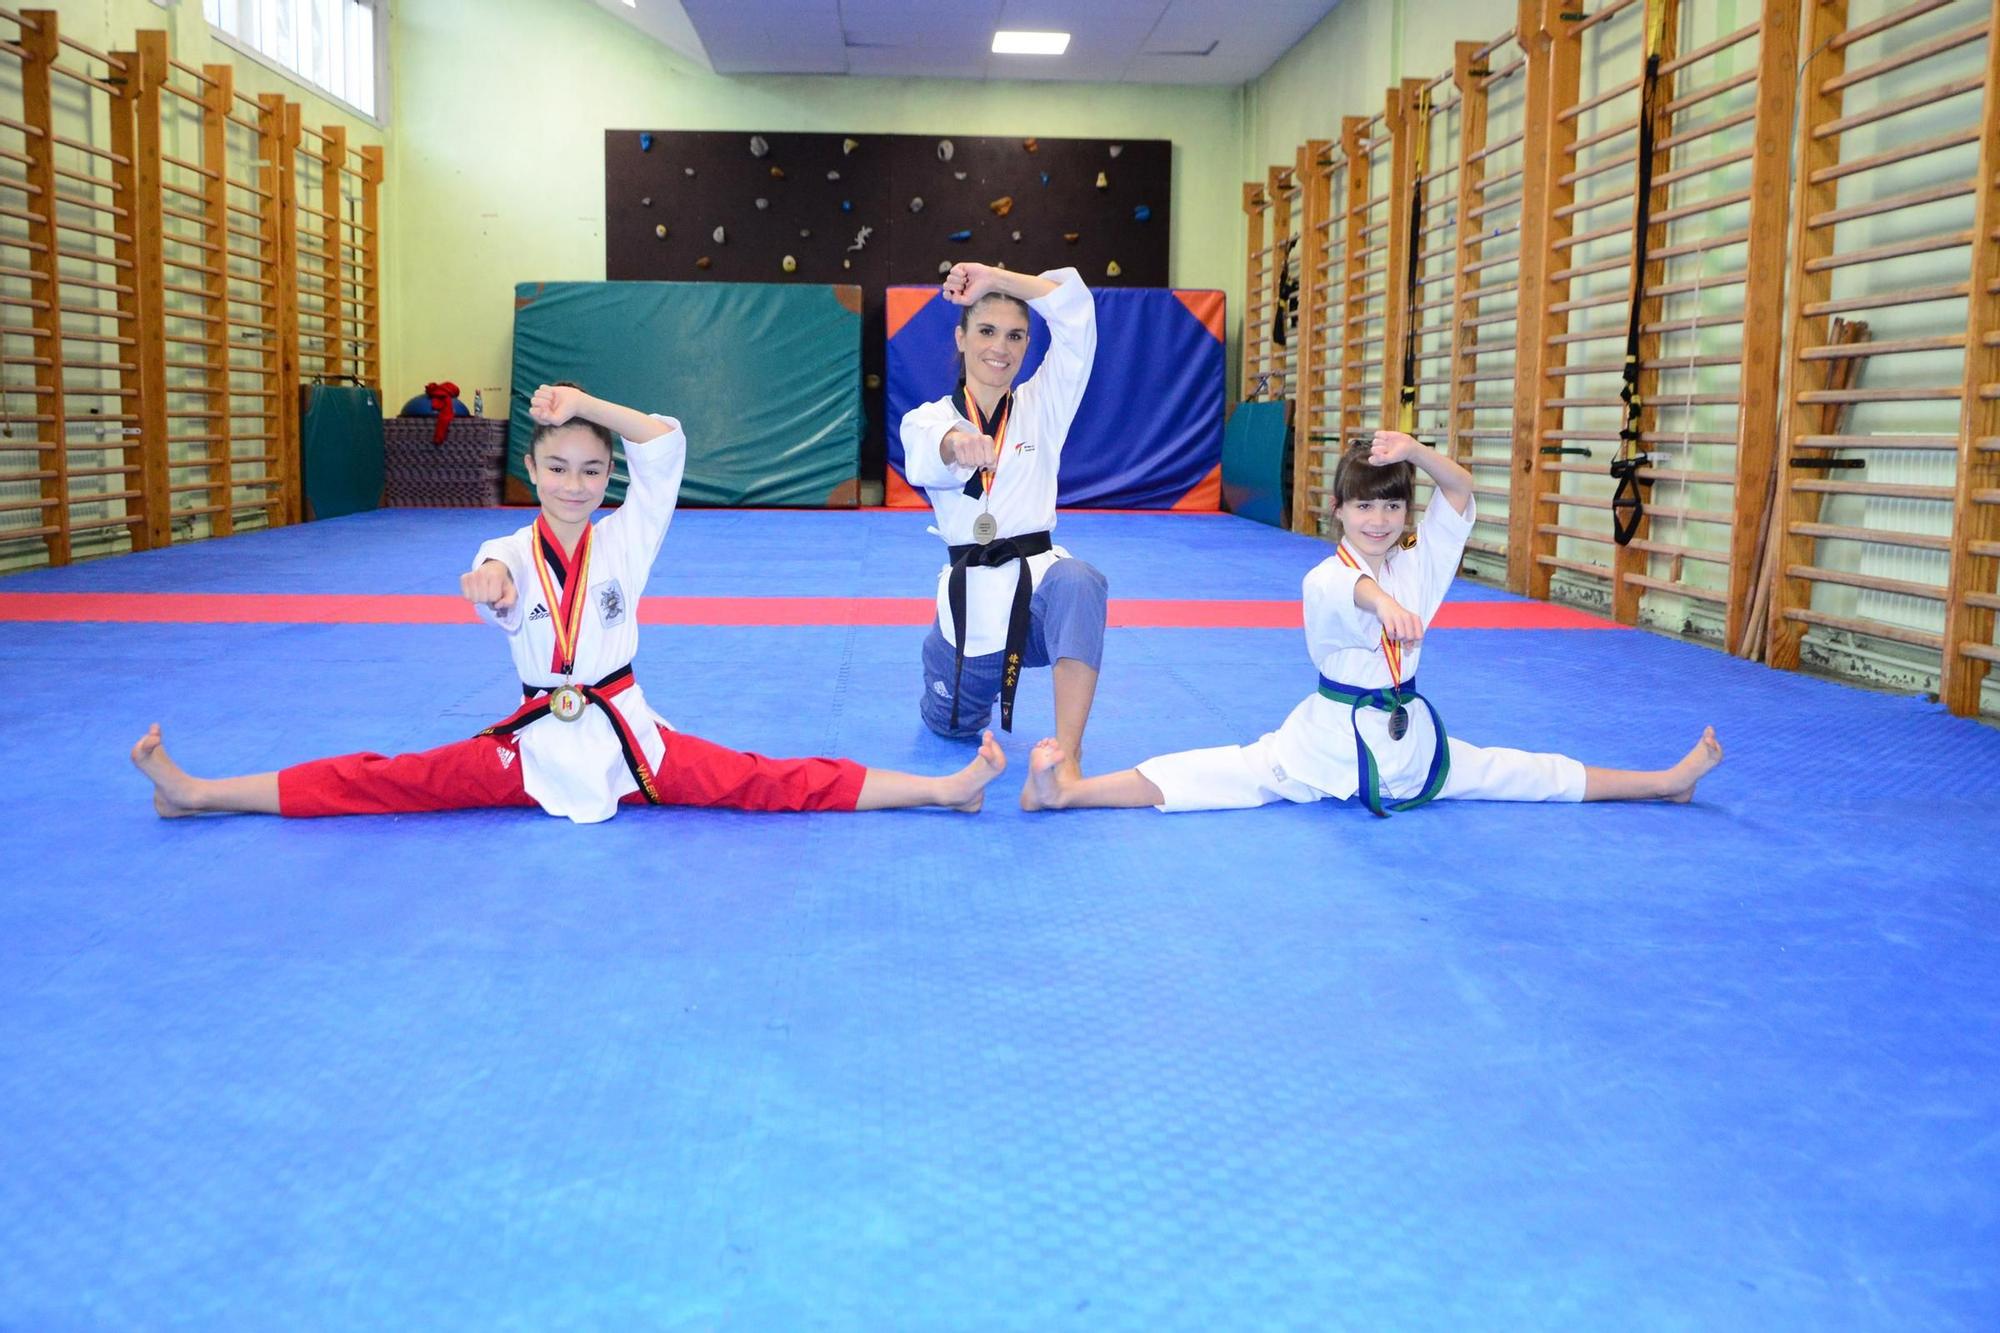 Tres campeonas de taekwondo en la familia